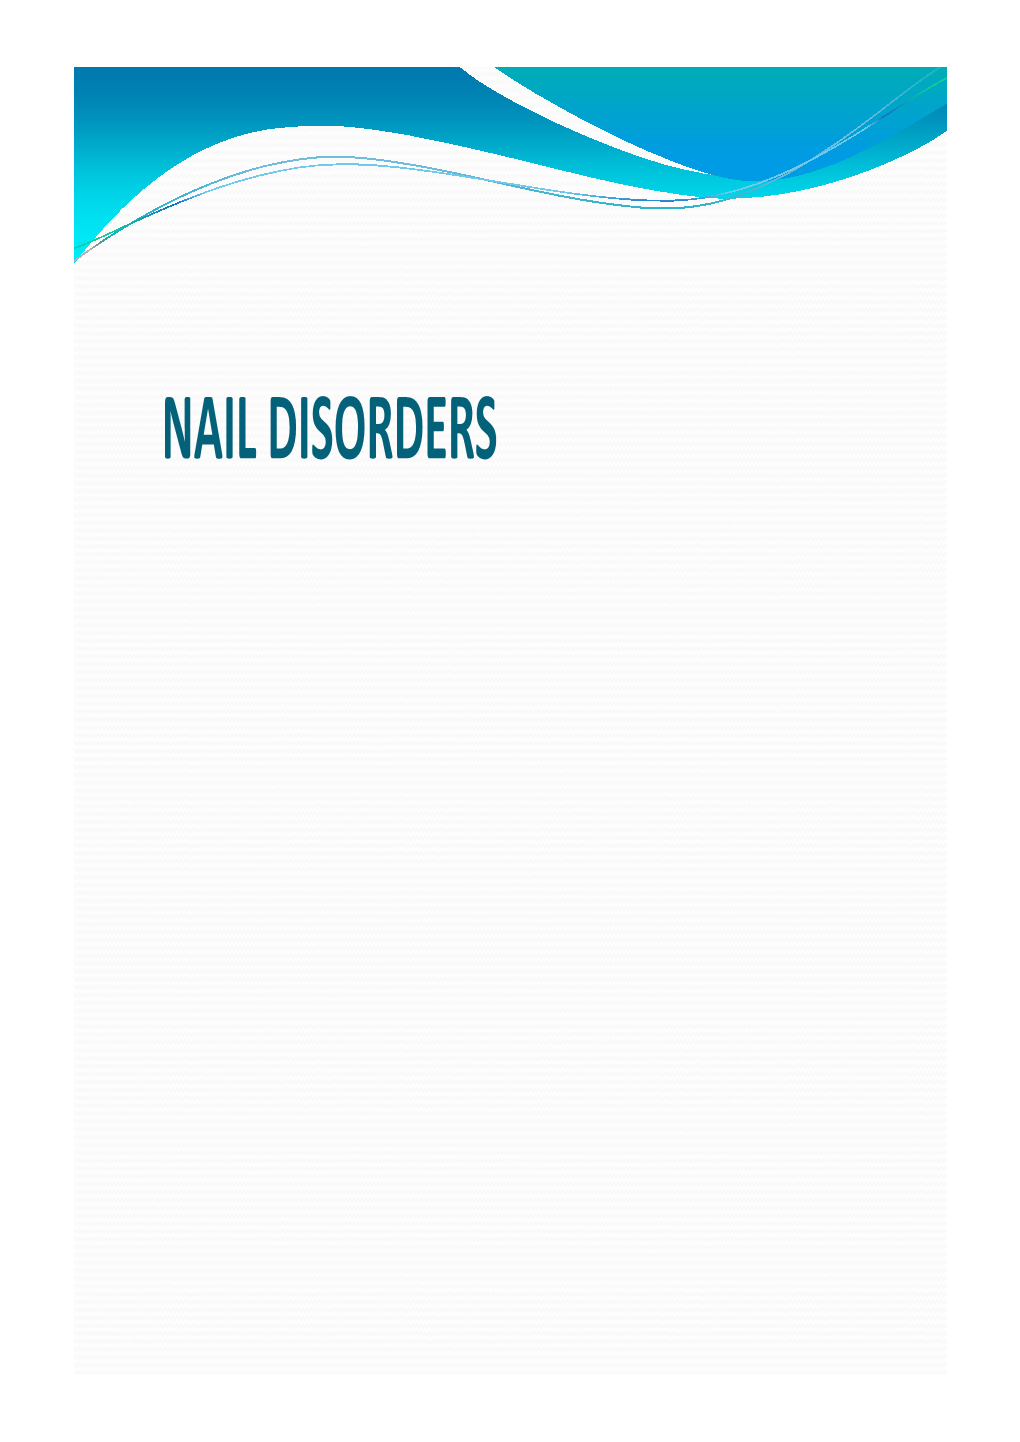 NAIL DISORDERS Structure of Nail Common Nail Disorders